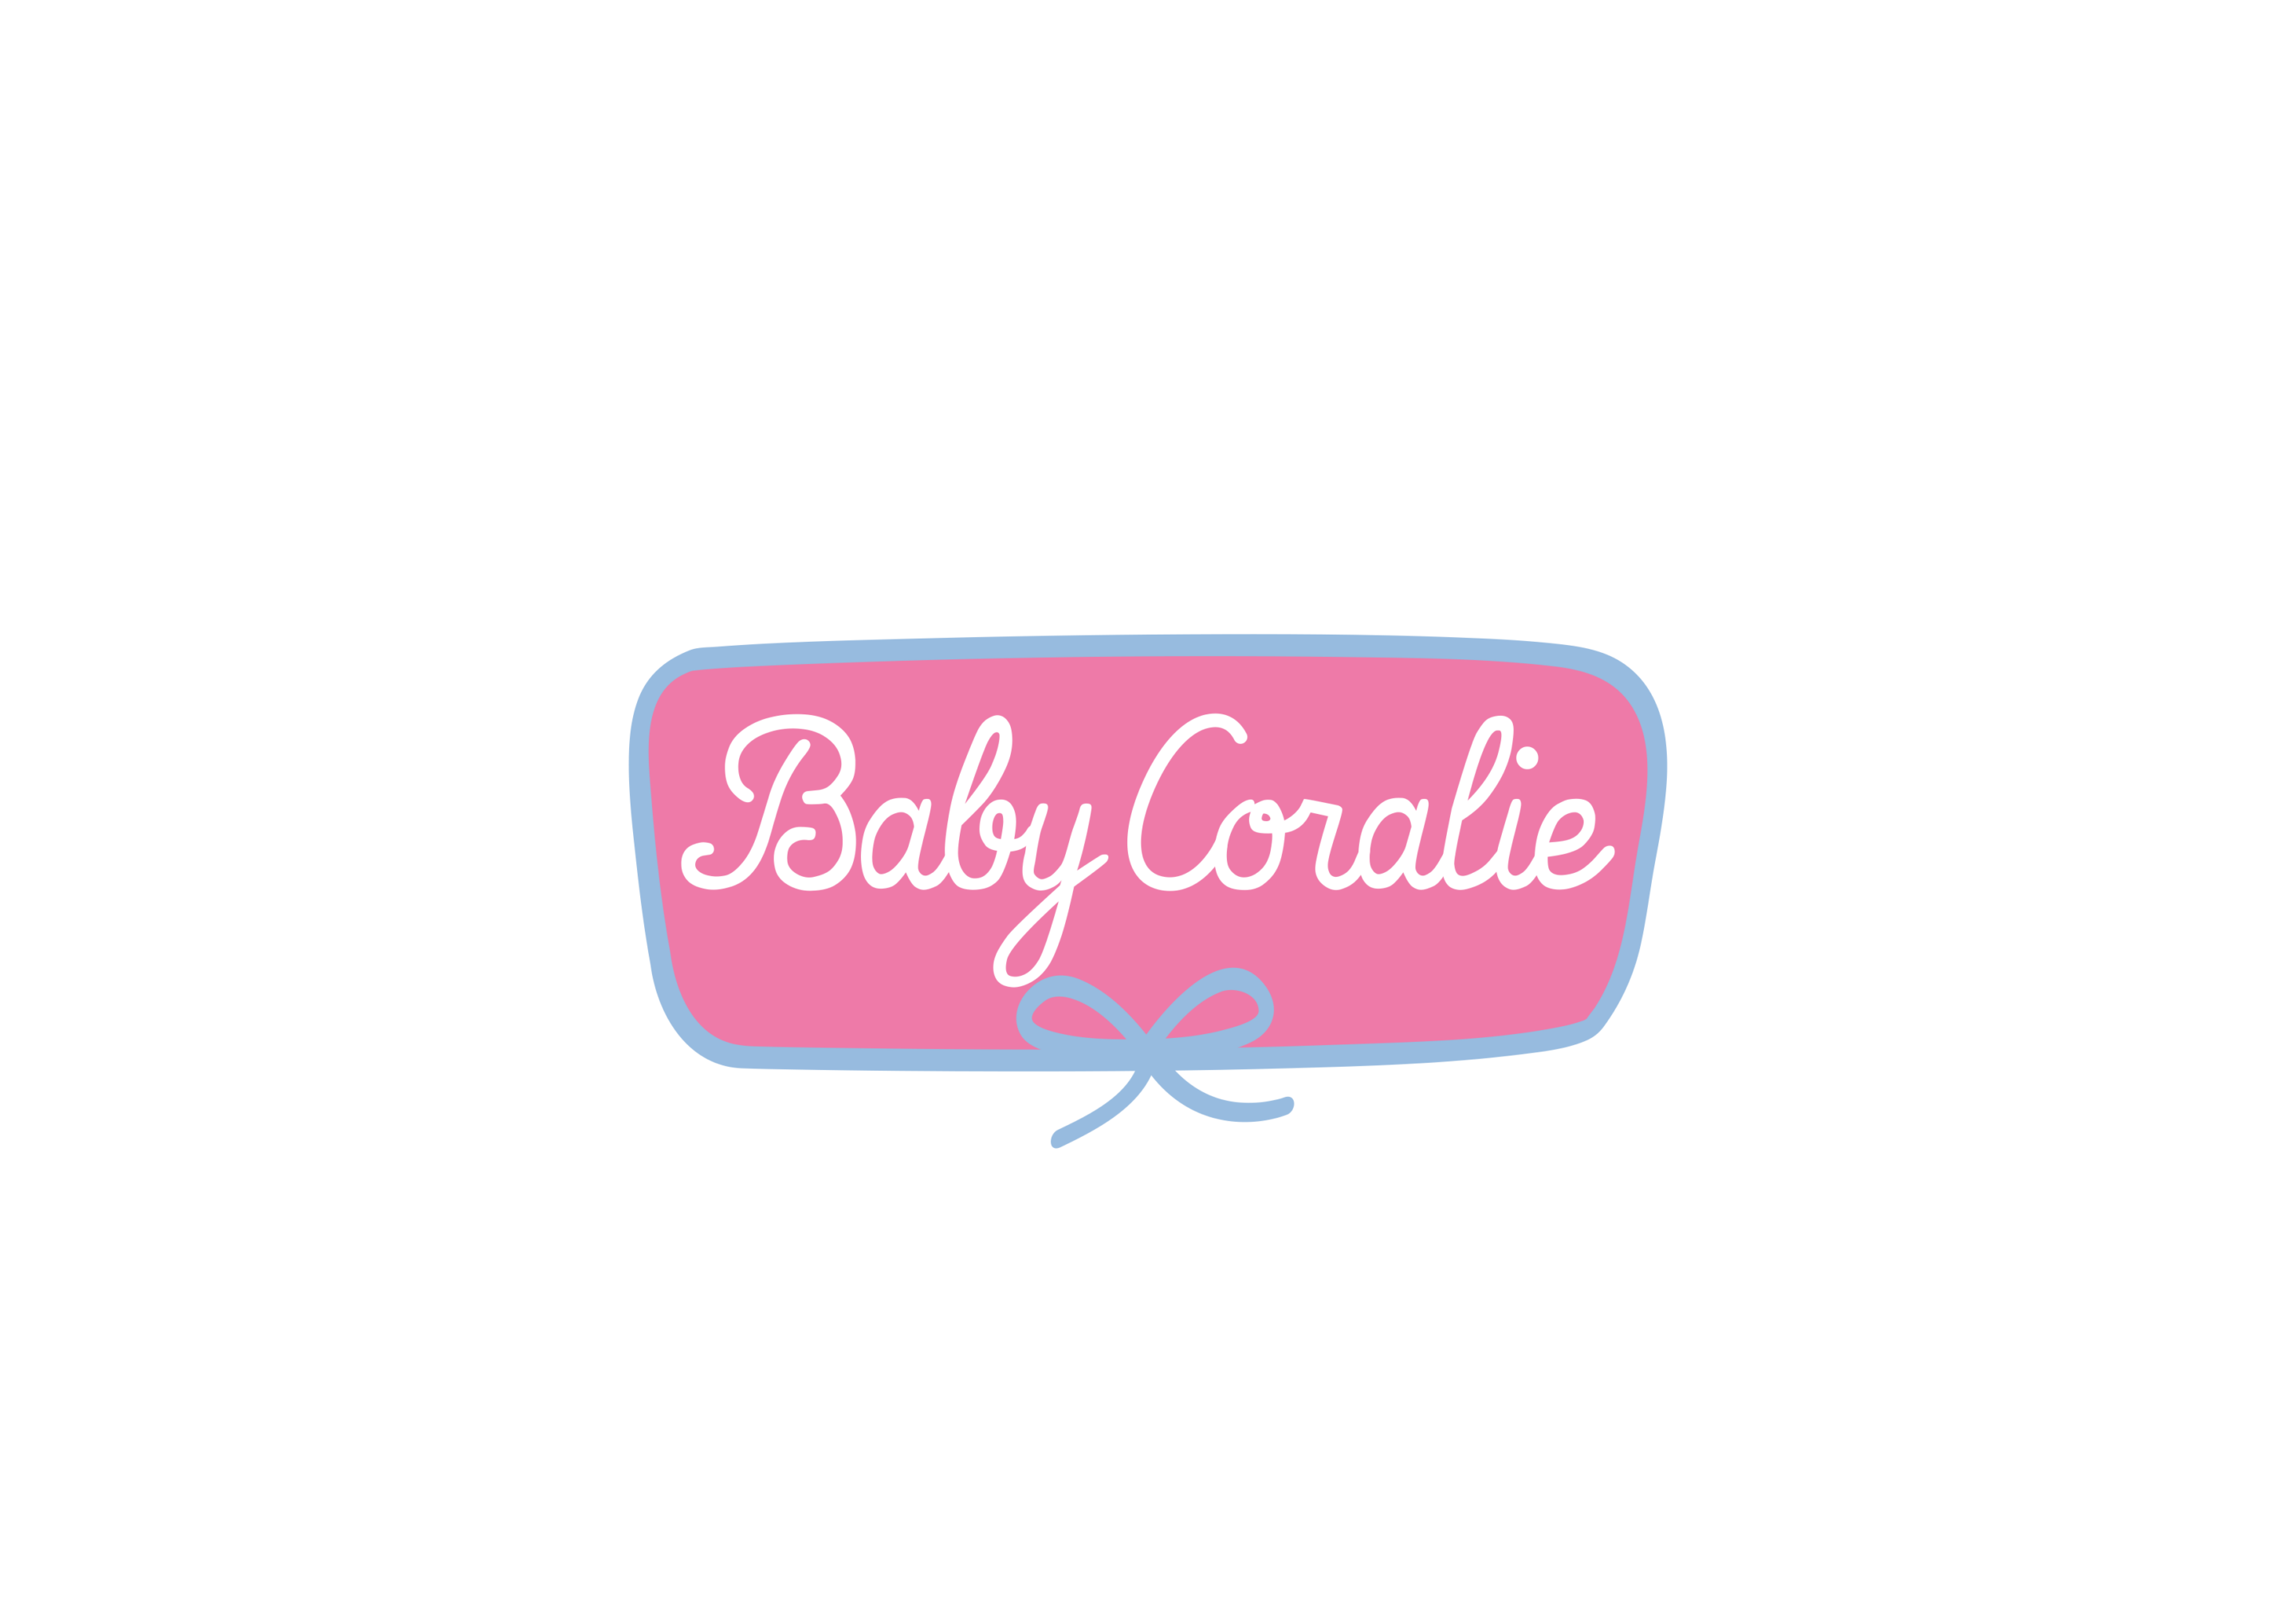 Baby Coralie - Bathtub Set with accessories